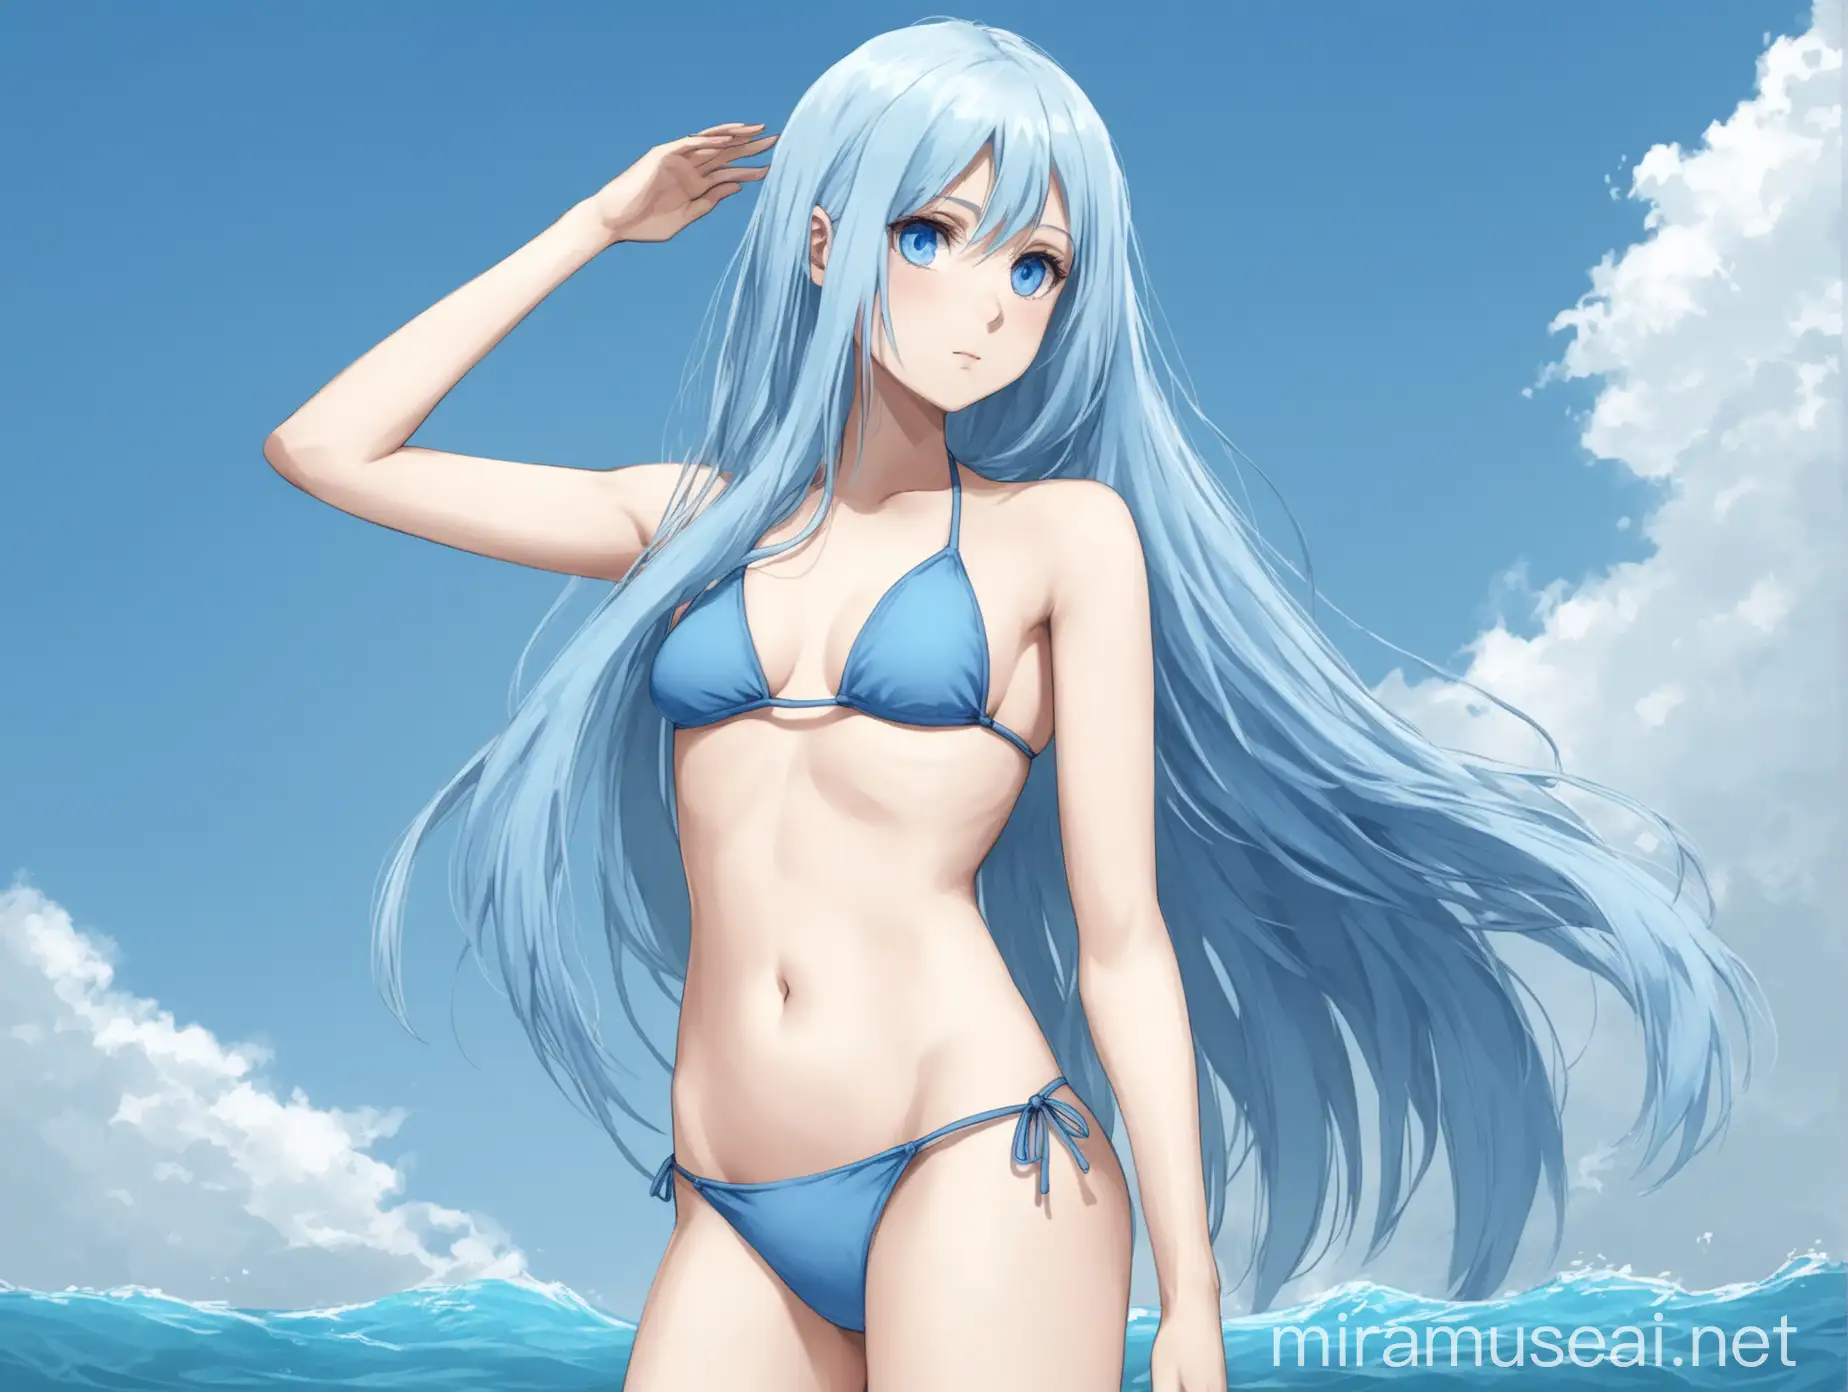 Tall Girl with Blue Hair in Bikini by the Ocean